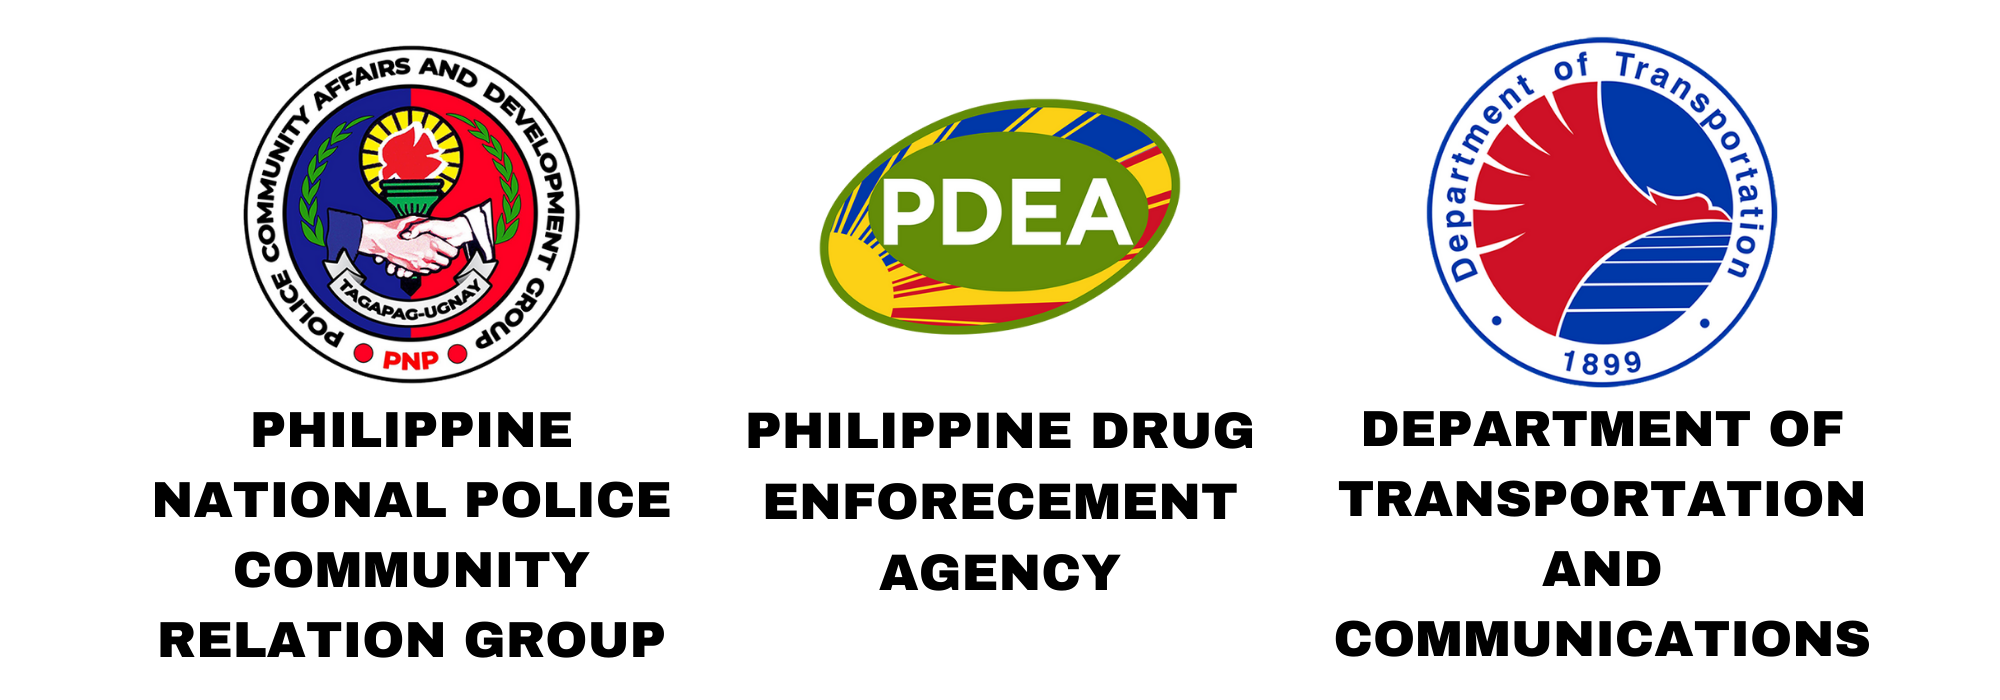 Philippine Drug Enforcement Agency (PDEA) Archives - Manila Standard